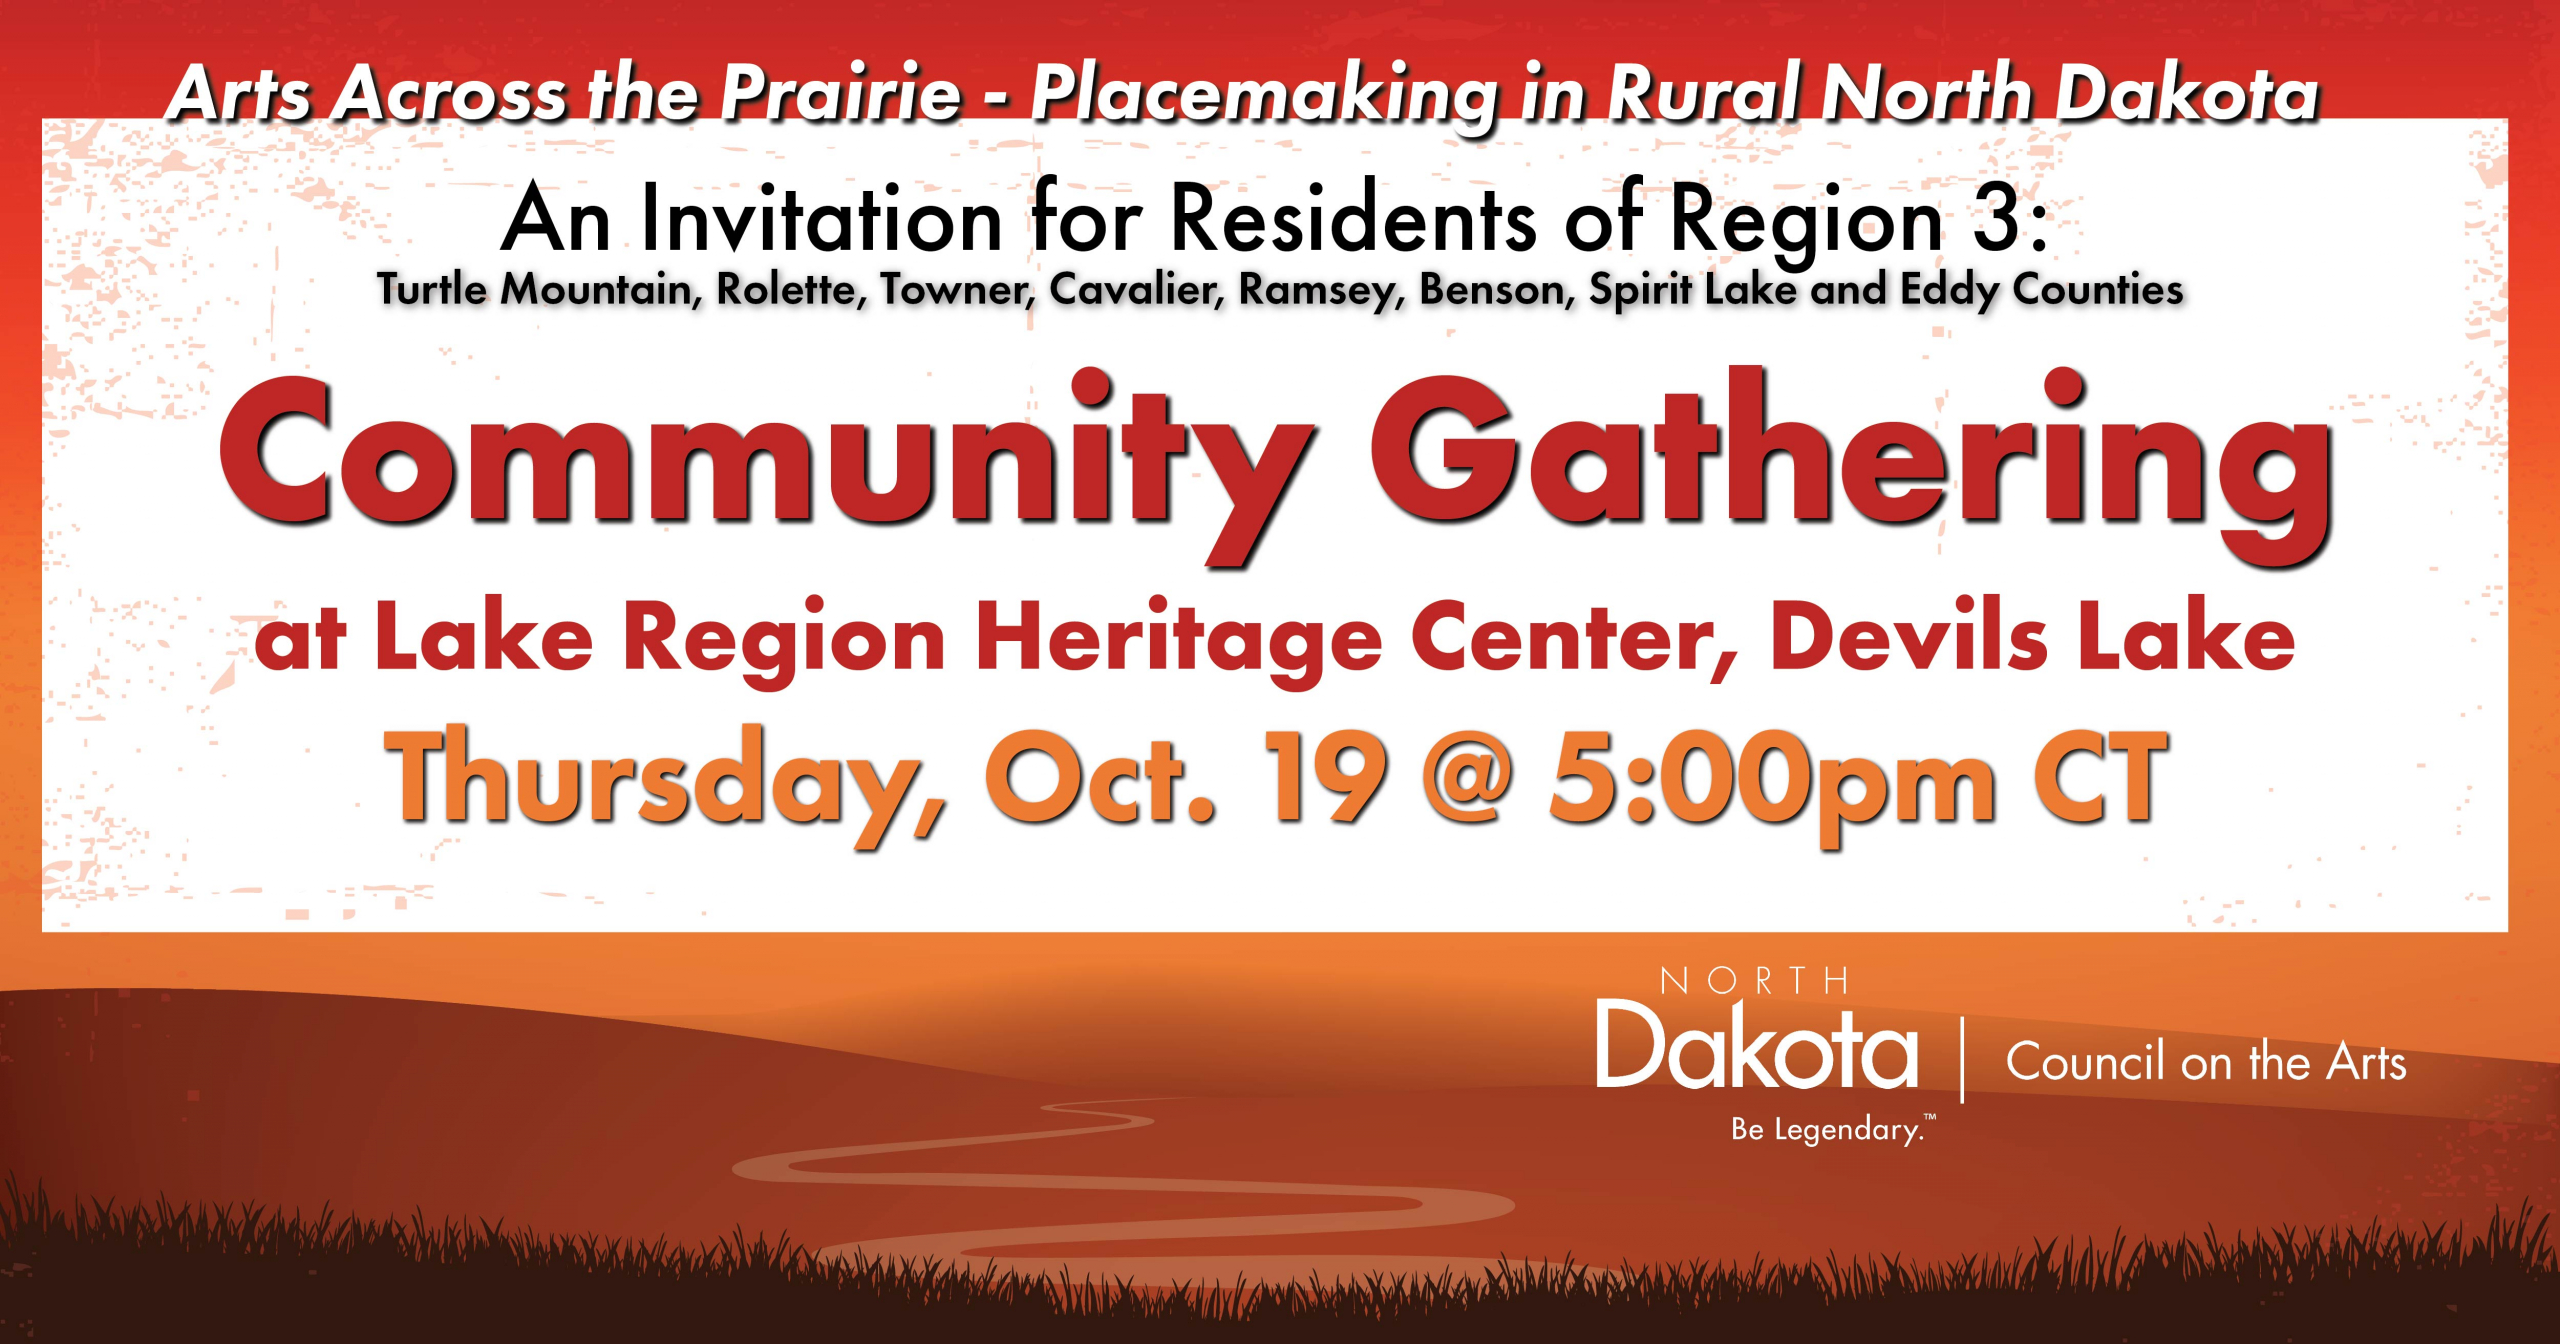 Community Gathering in Region 3 on Thursday, October 19 at 5pm at Lake Region Heritage Center in Devils Lake